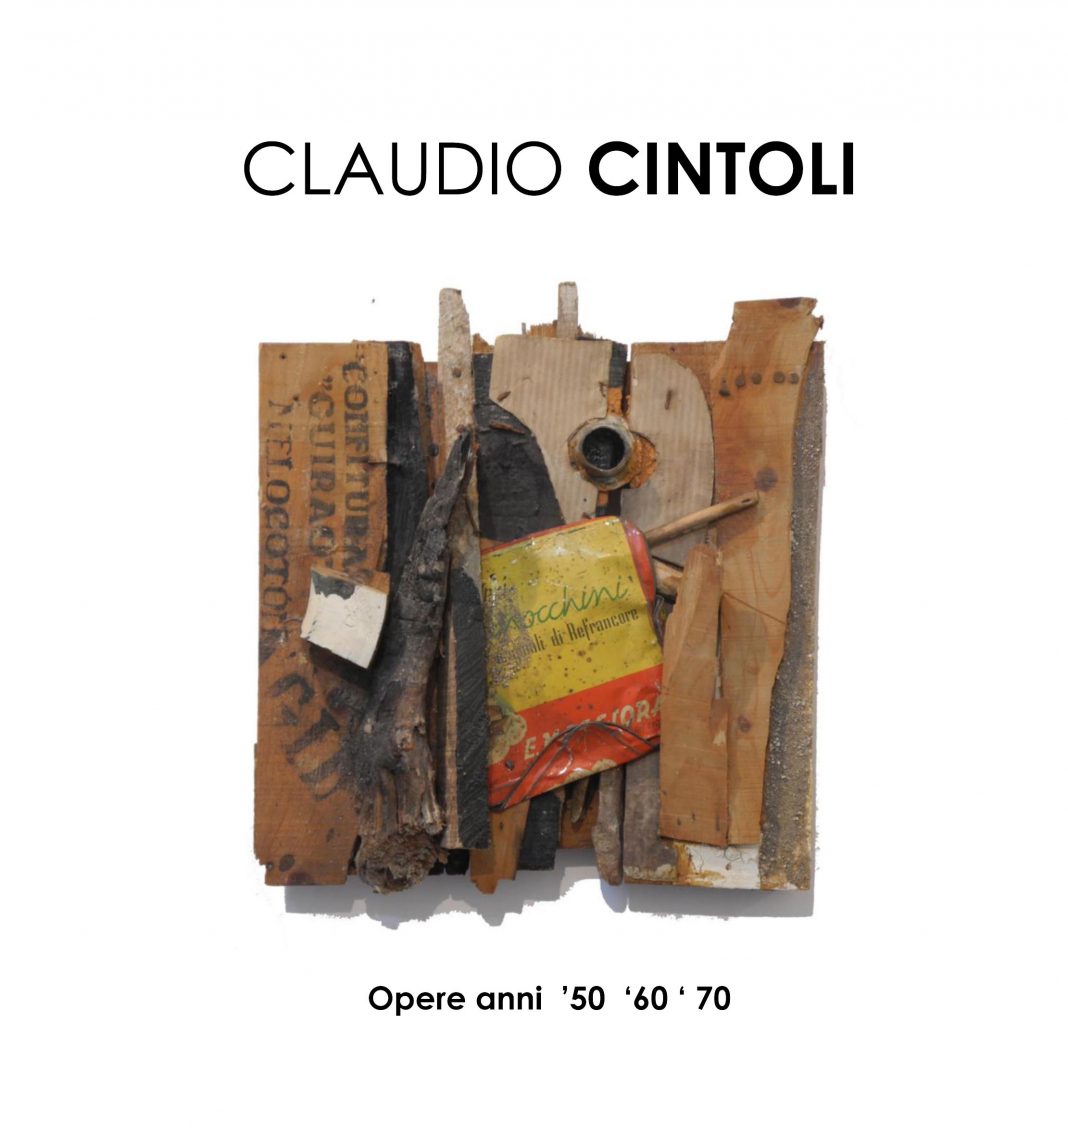 Claudio Cintoli – Opere anni ’50 ’60 ’70https://www.exibart.com/repository/media/eventi/2015/10/claudio-cintoli-8211-opere-anni-821750-821760-821770-1068x1148.jpg